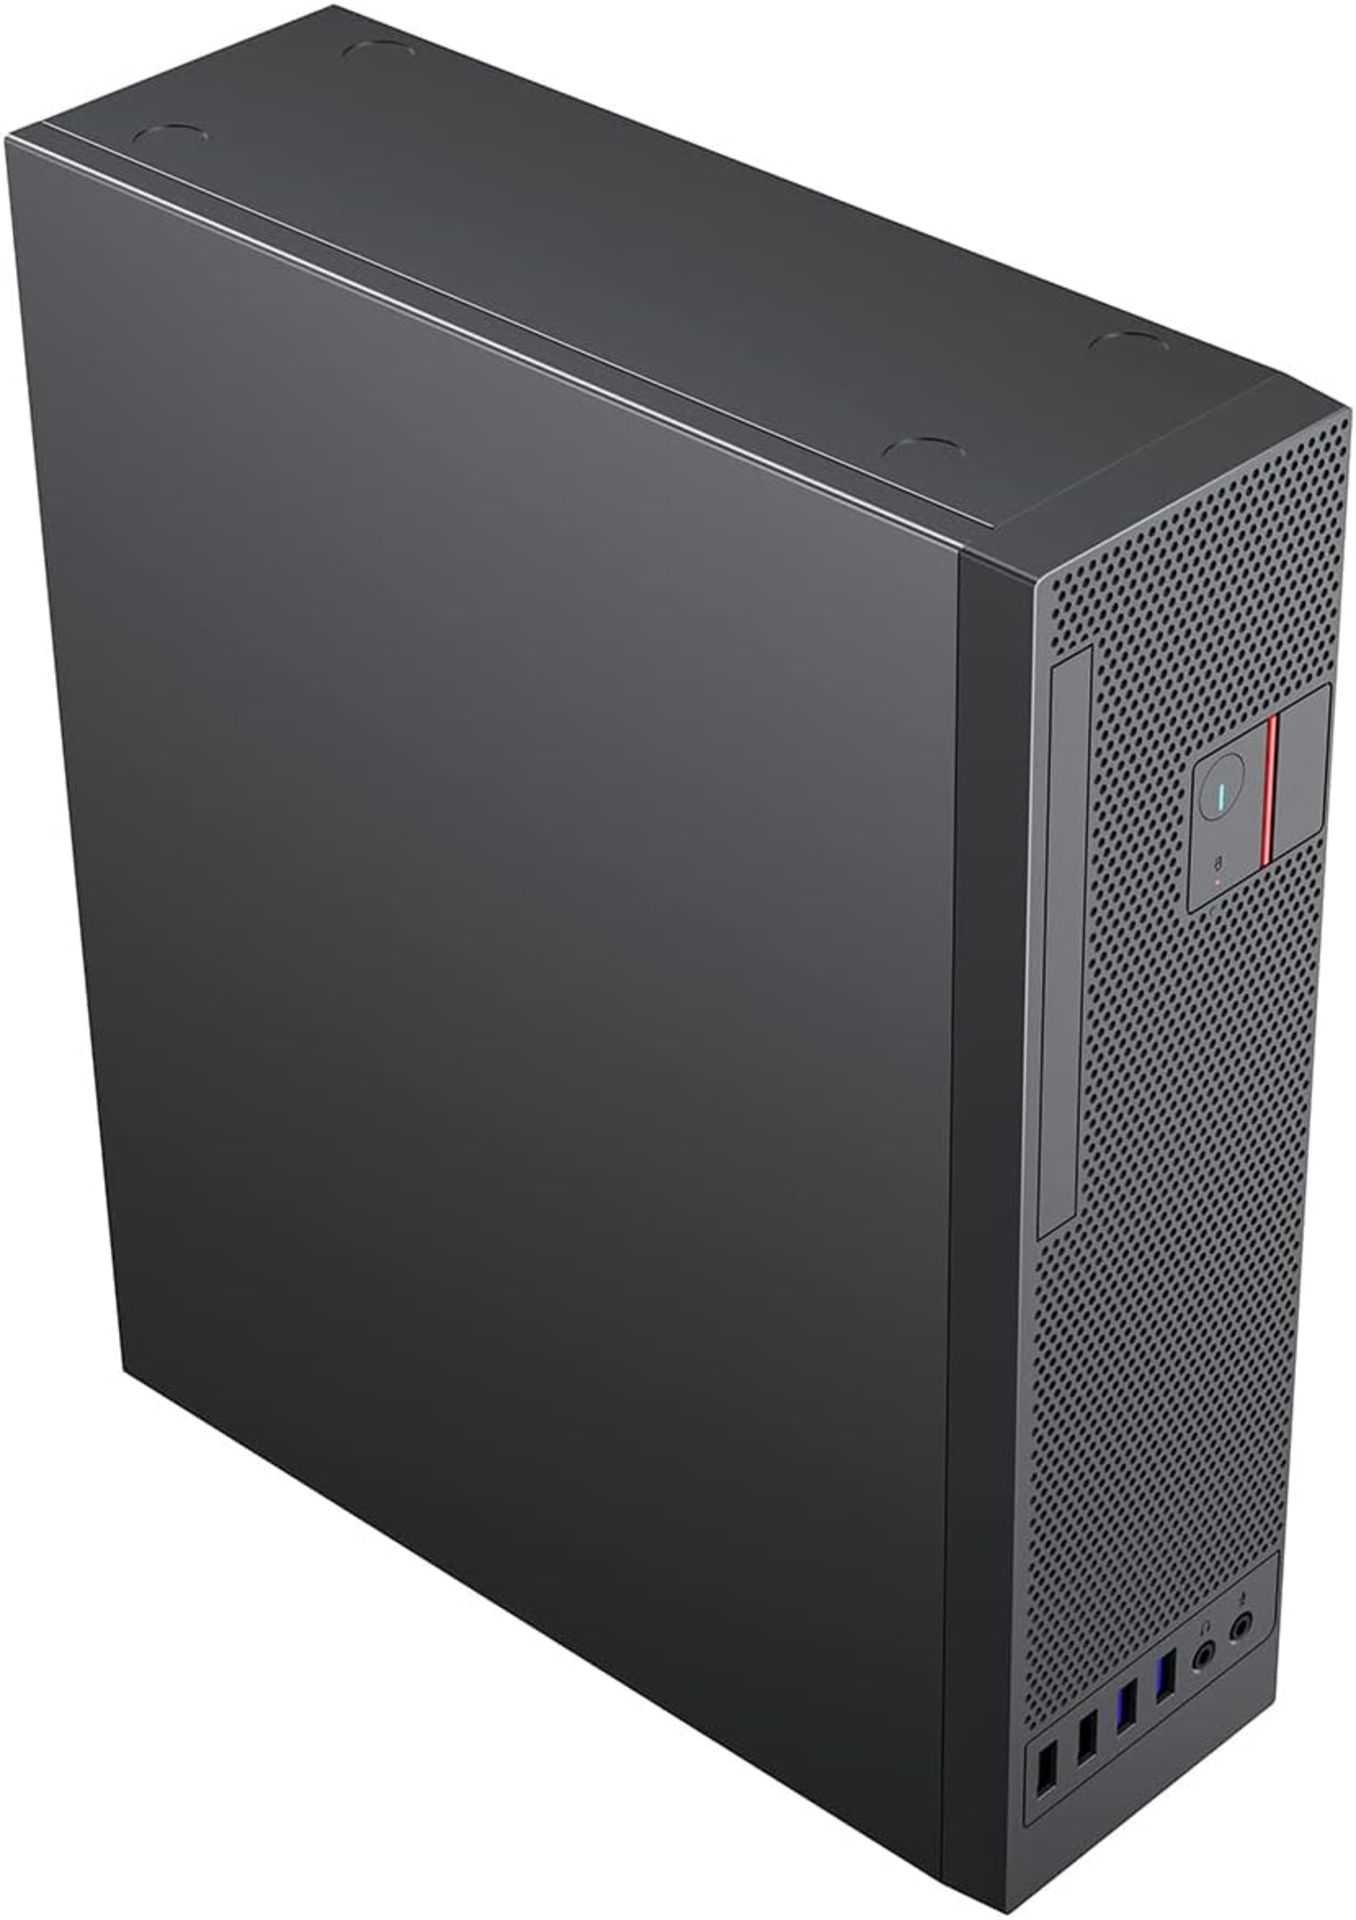 2x NEW & BOXED CIT S8i SFF Micro ATX Desktop Case. RRP £77.99 EACH. (PCK). CiT S8i - A Micro-ATX 8.3